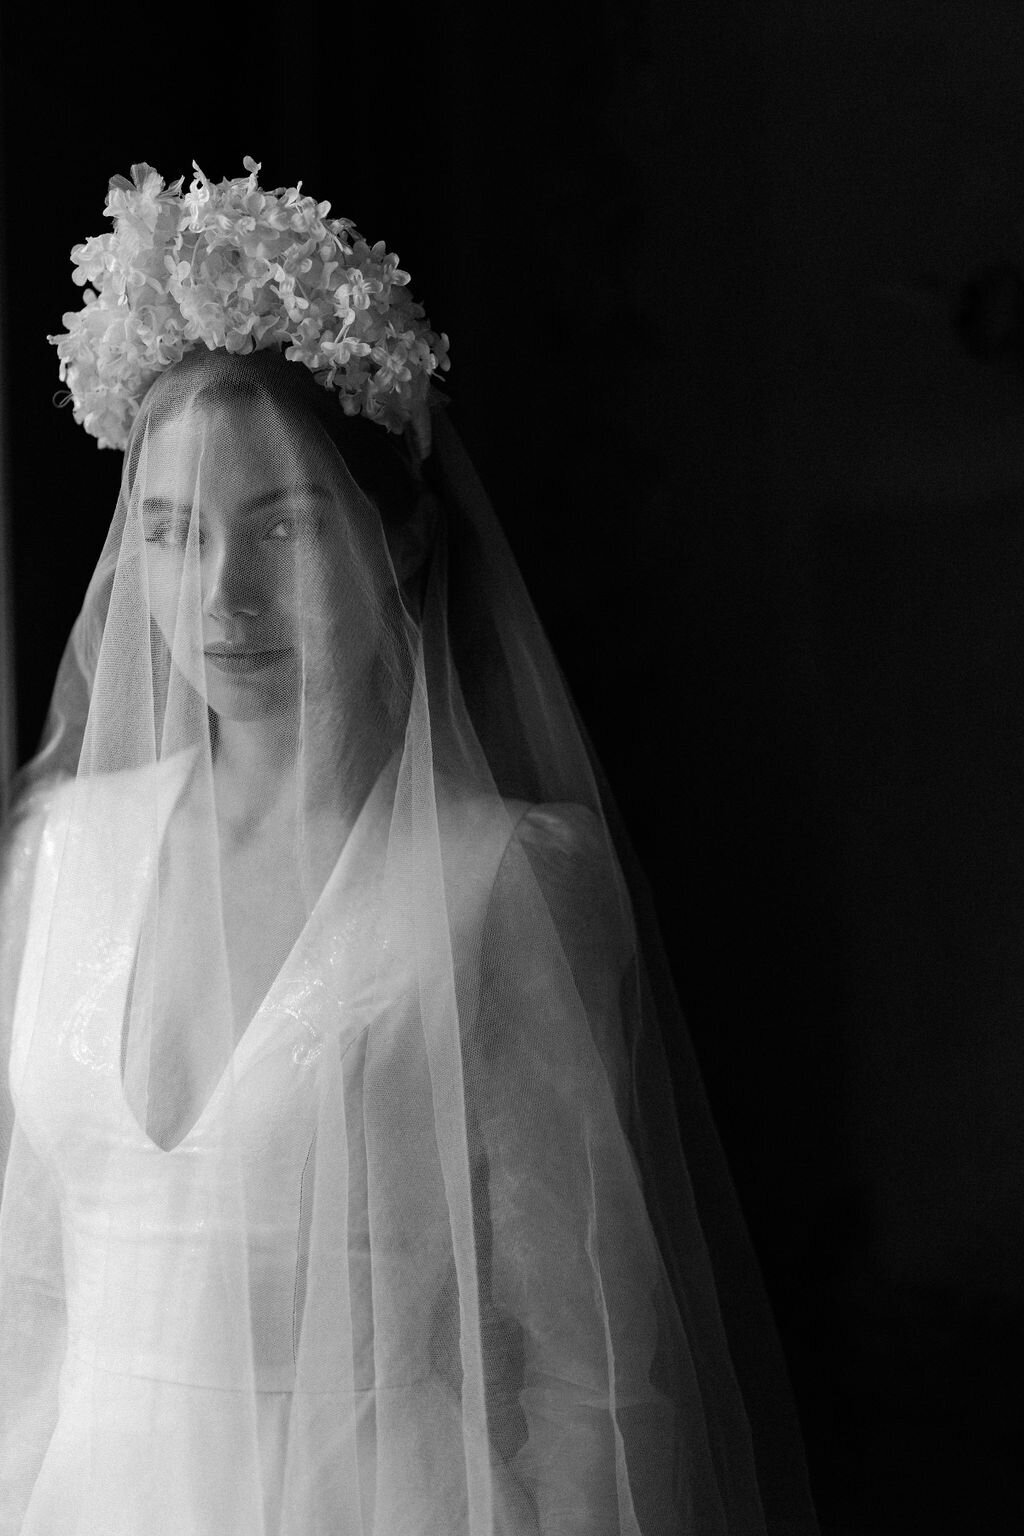 black and white portrait wearing wedding dress